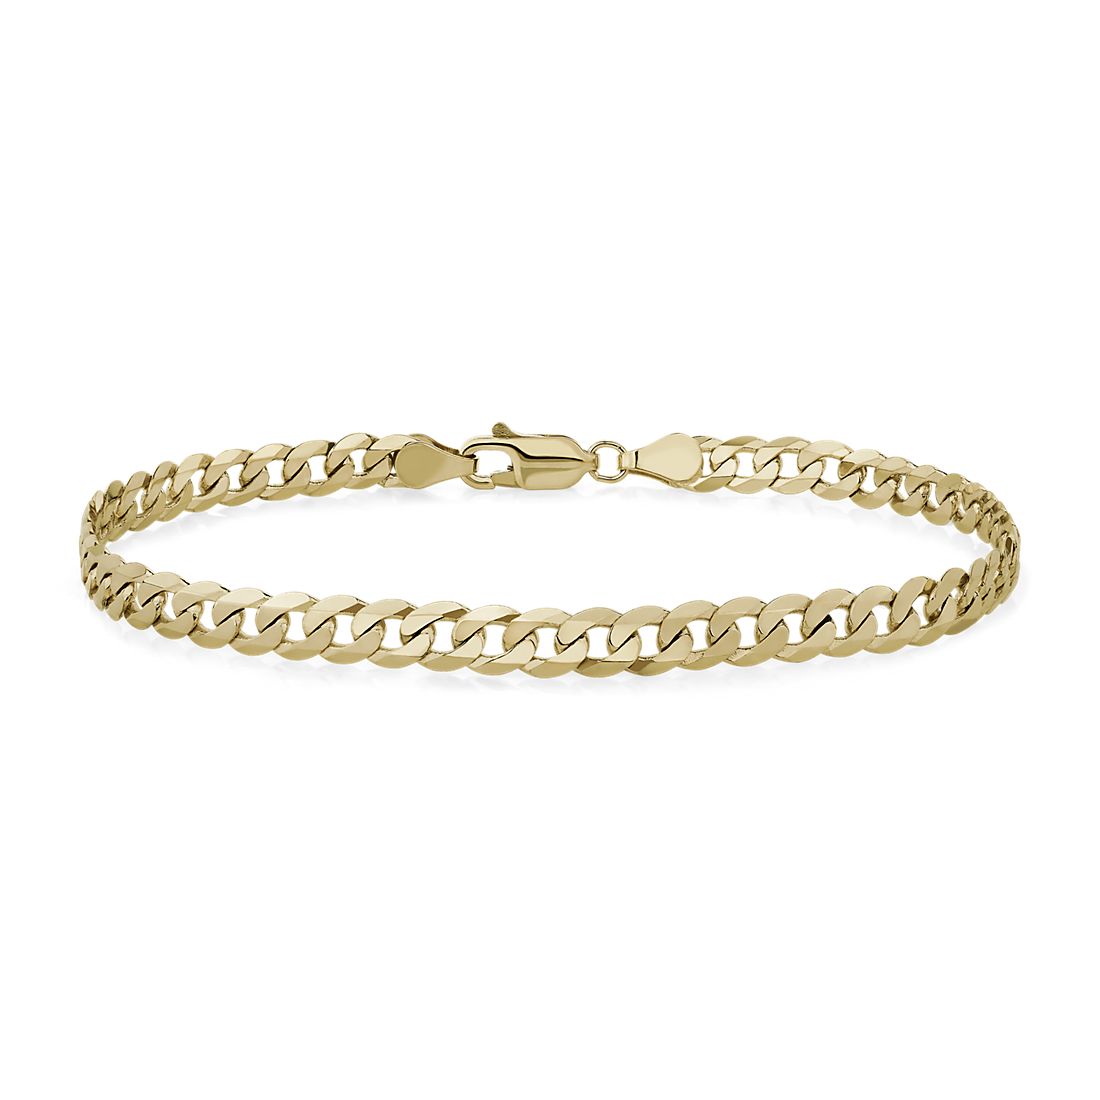 8" Men's Flat Beveled Curb Chain Bracelet in 14k Yellow Gold (4.75 mm)